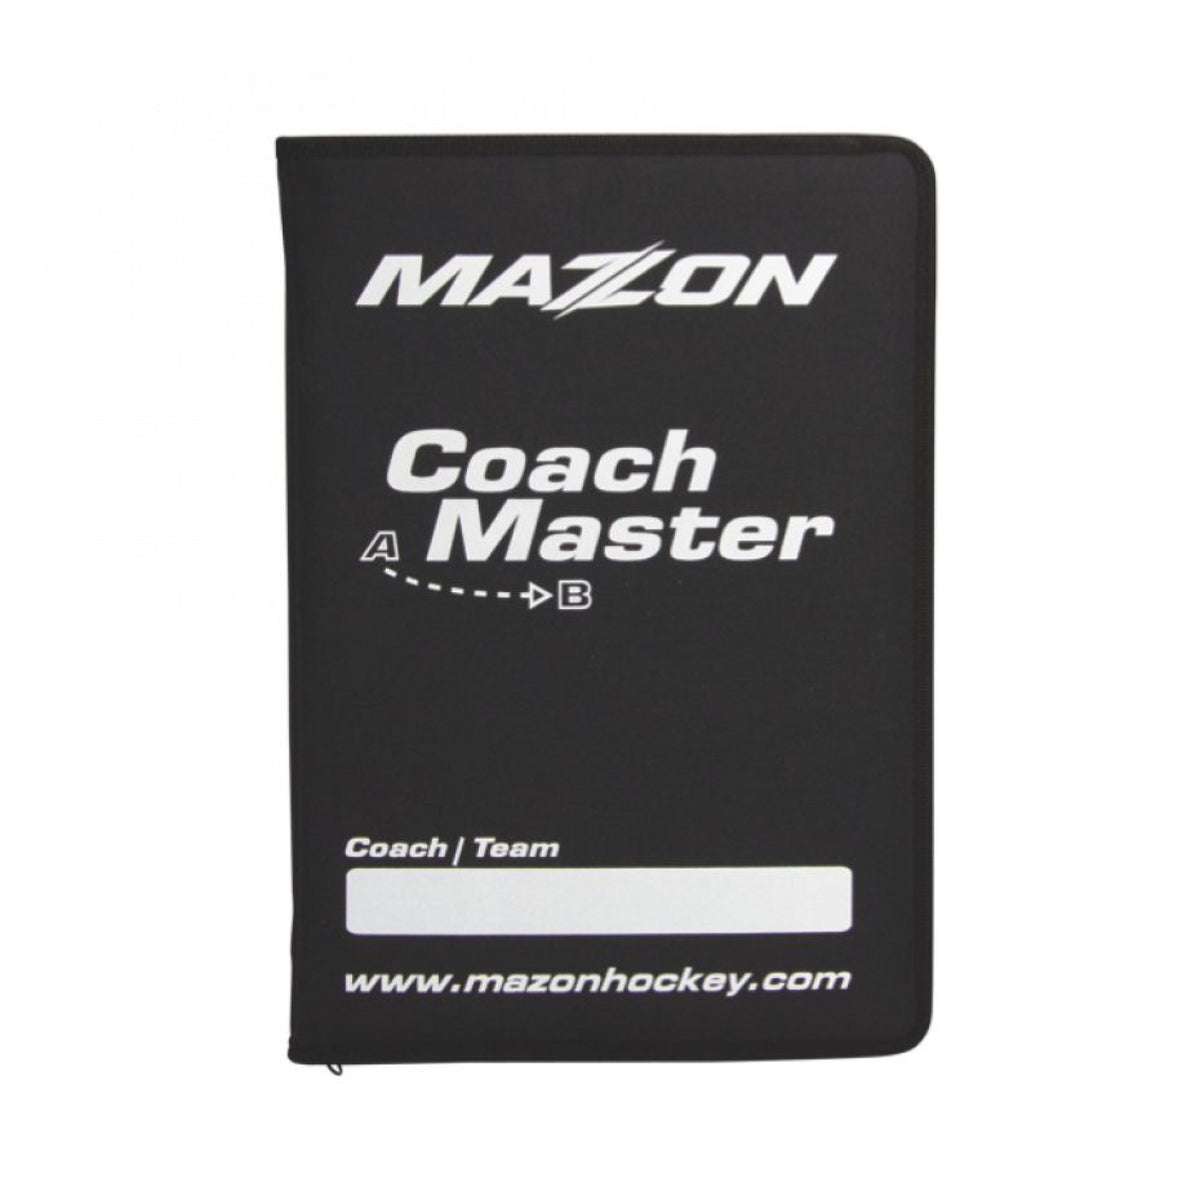 Coach Master